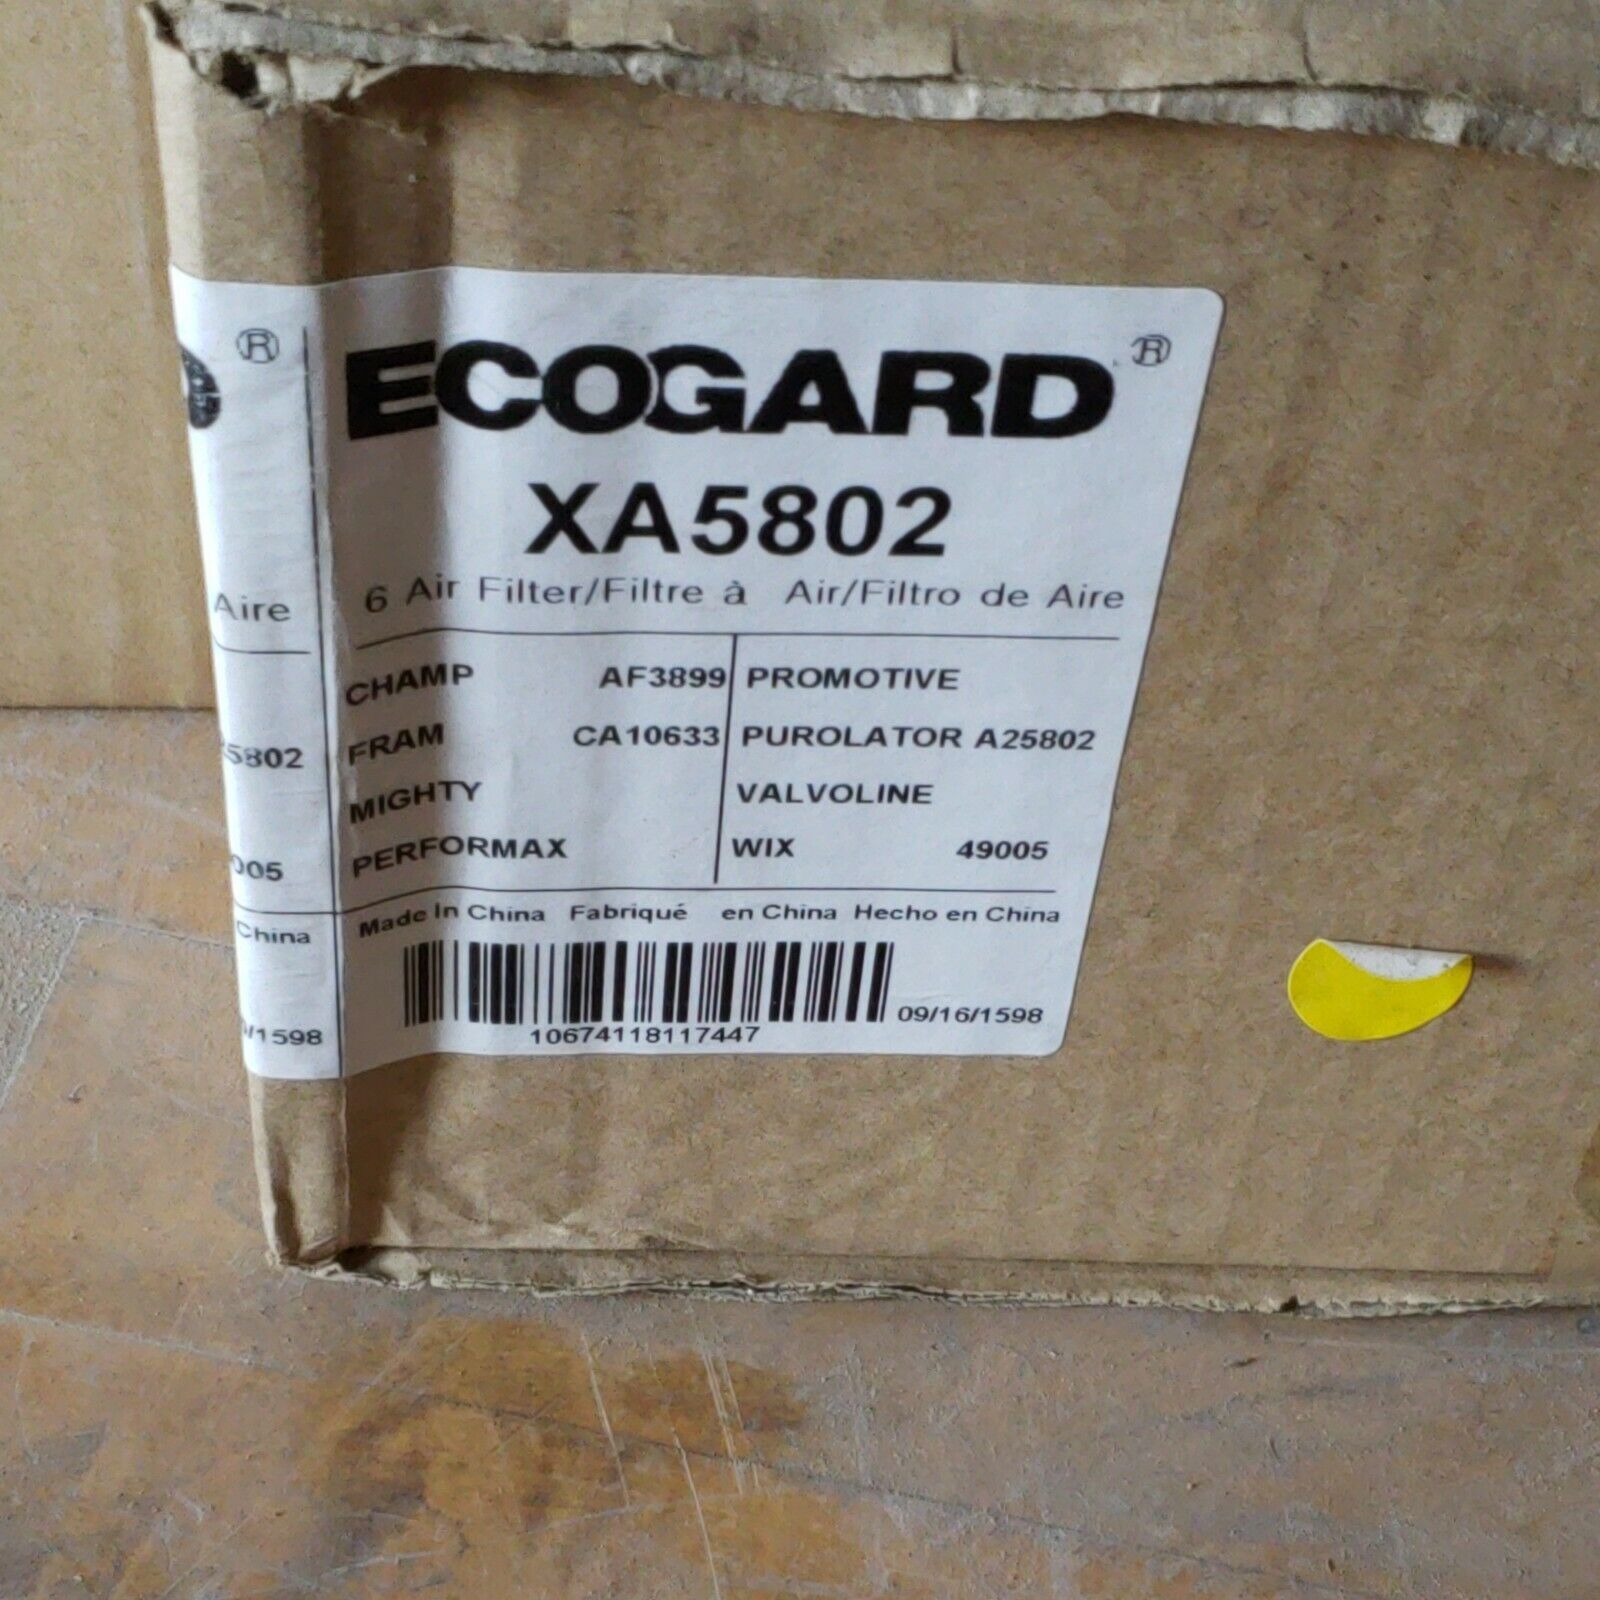 1x ecogard xa5802 Air Filter For 2007-2009 Suzuki SX4